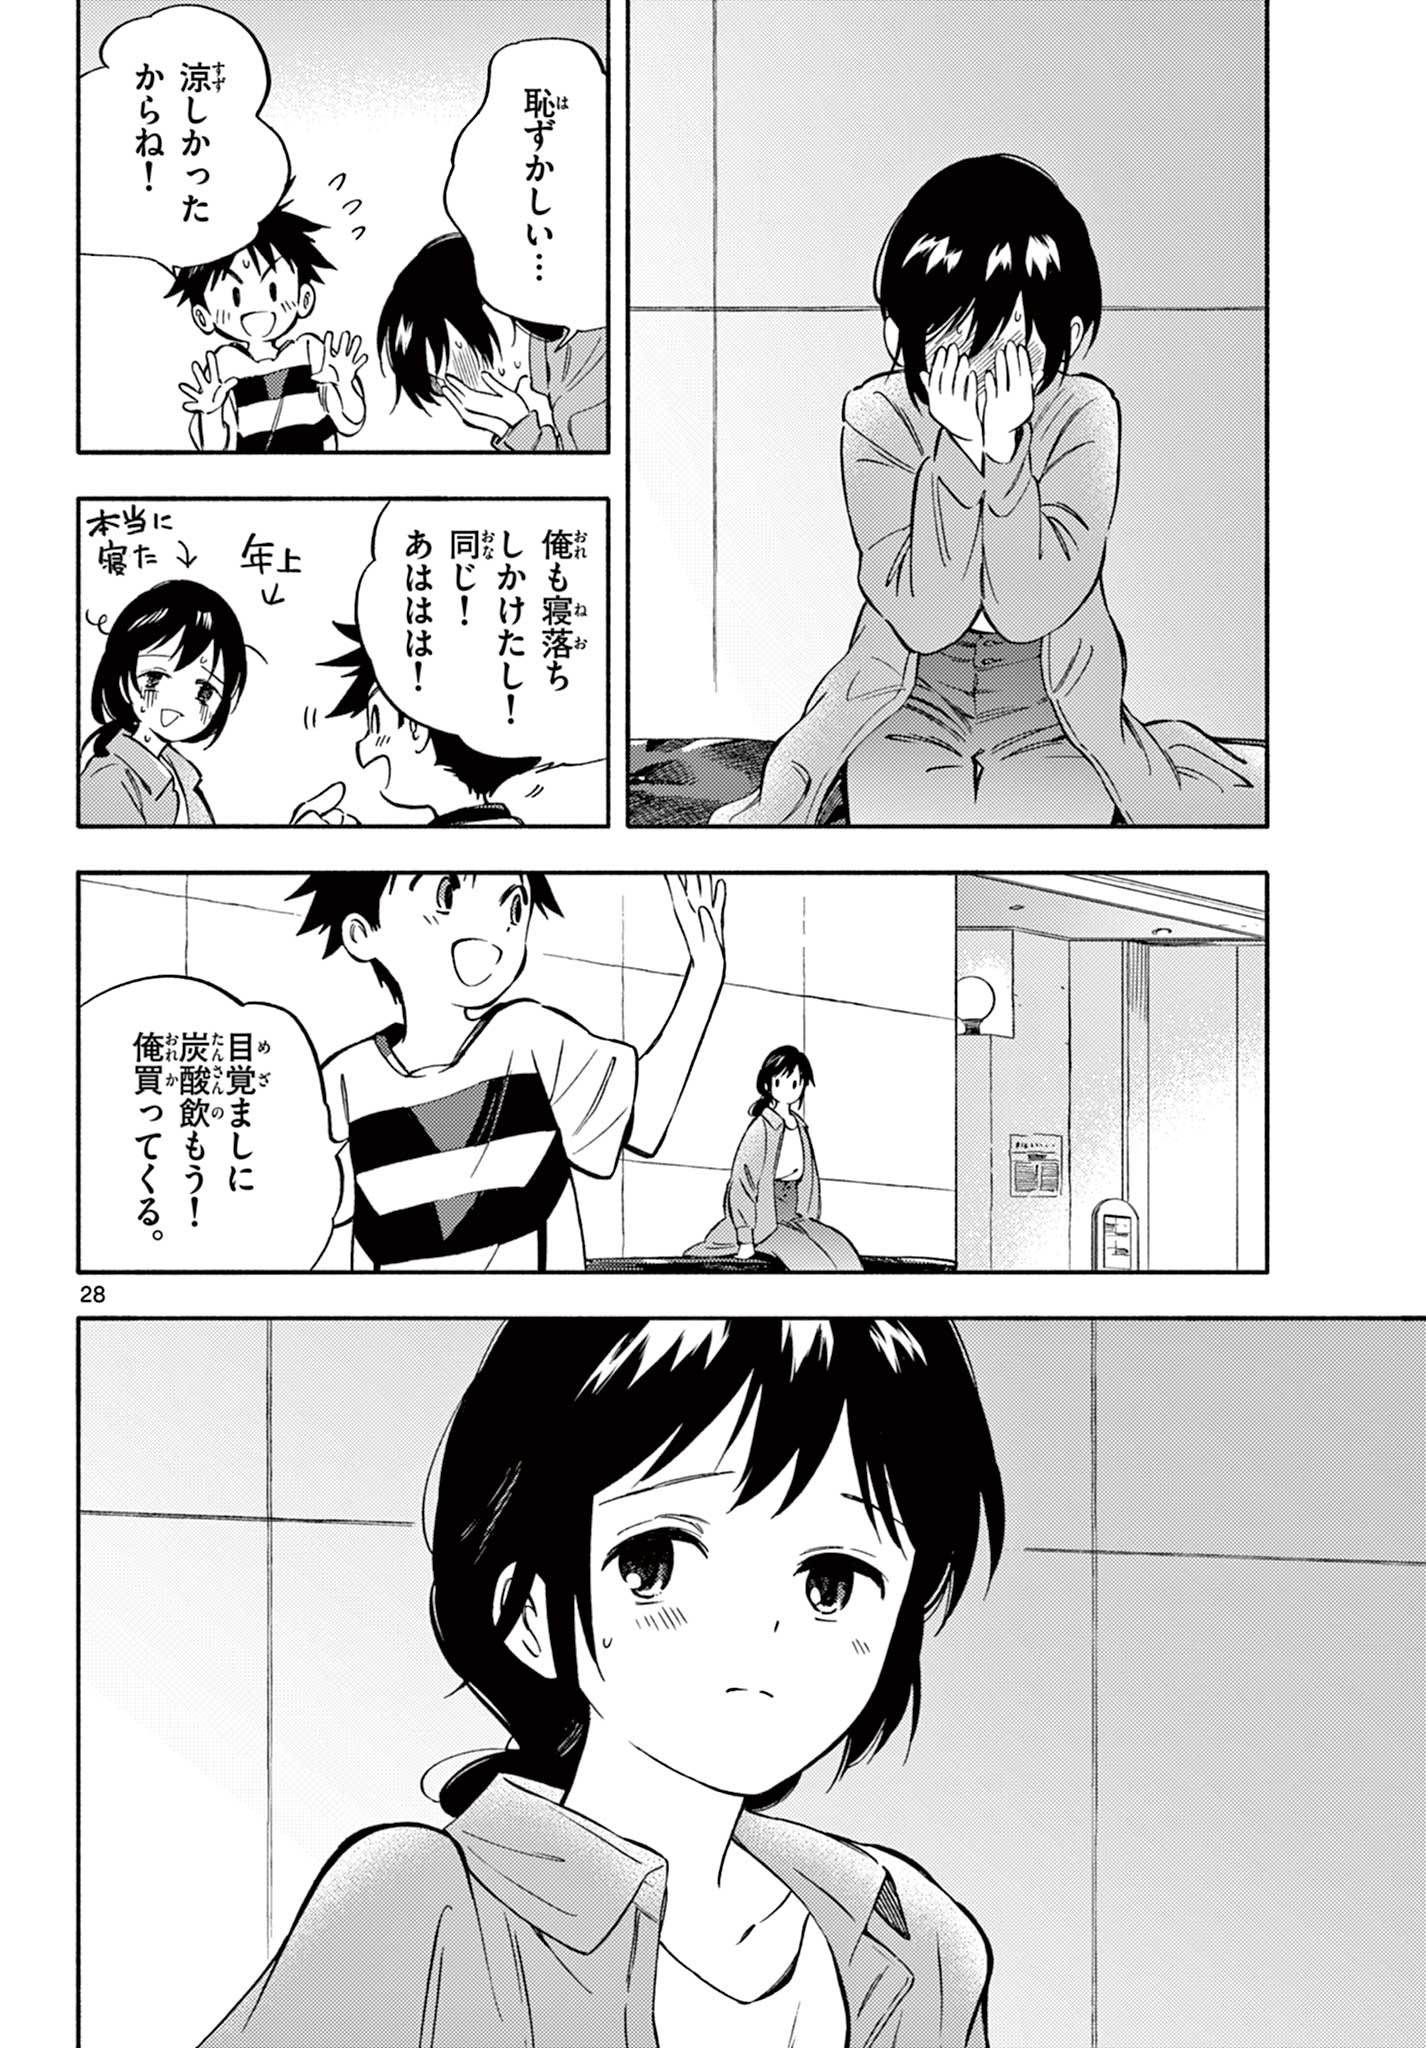 Nami no Shijima no Horizont - Chapter 15.2 - Page 13